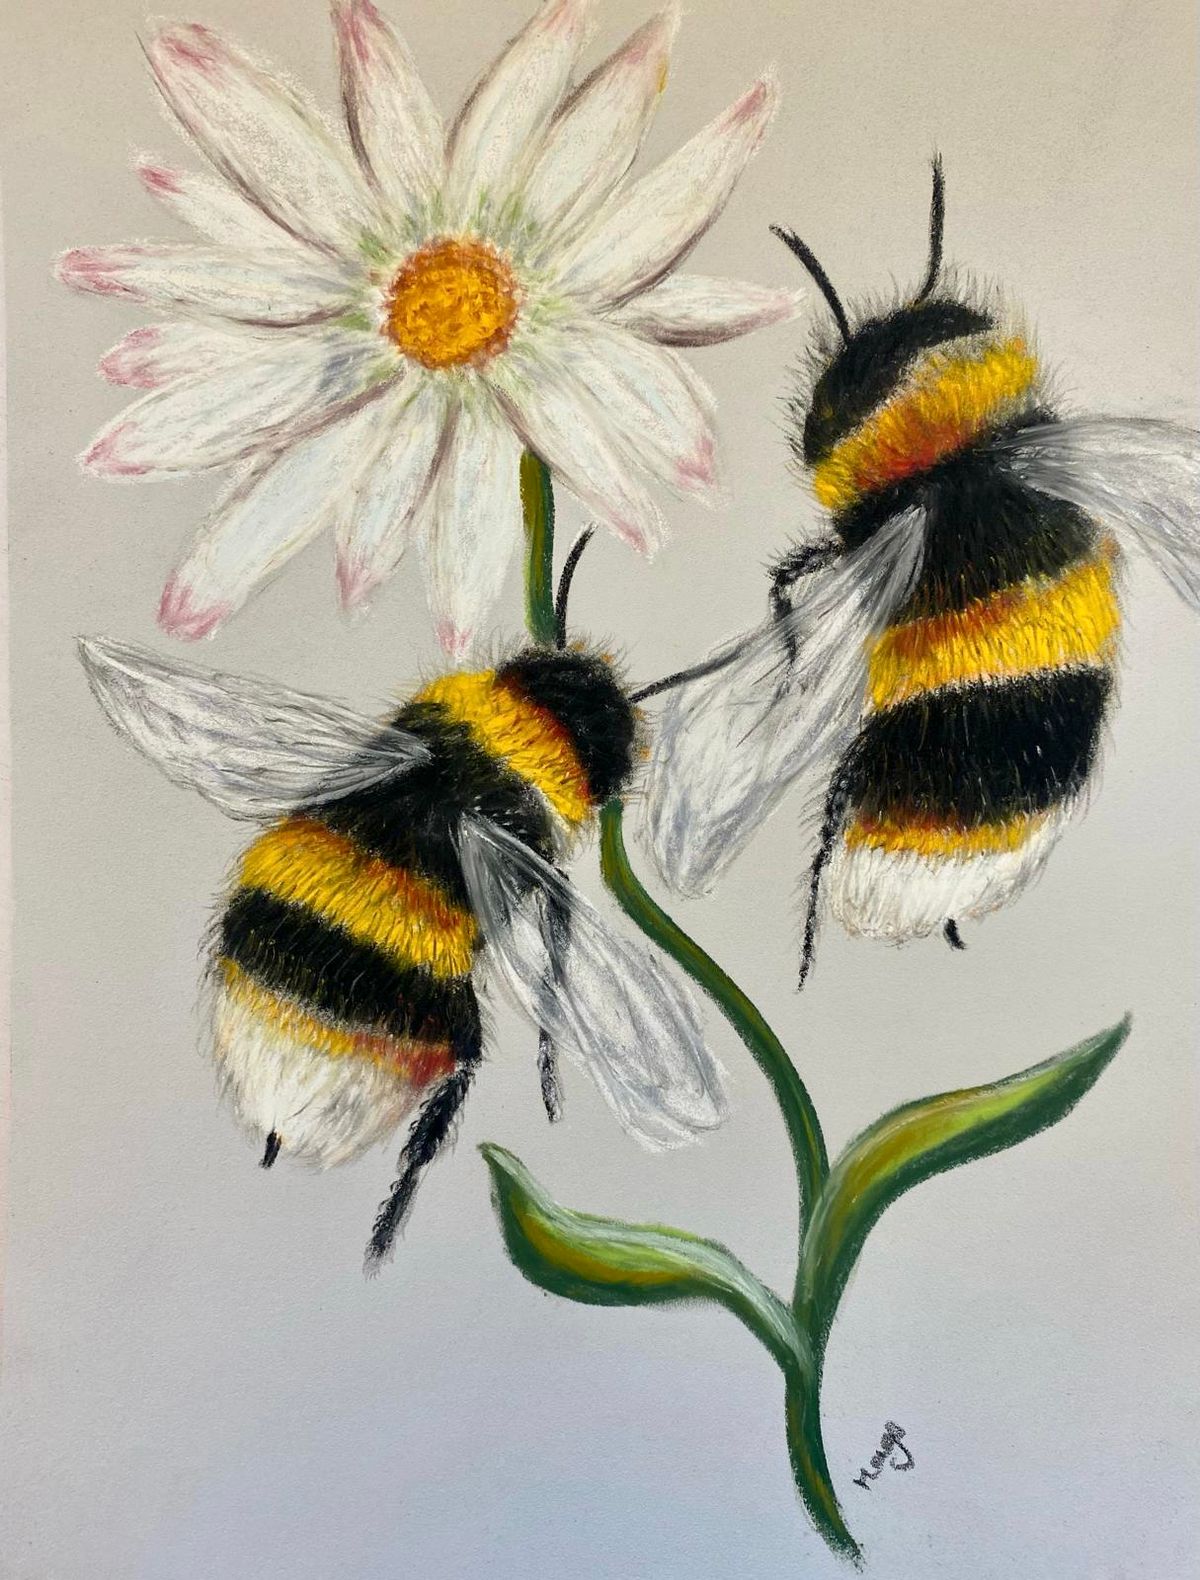 Beginner's Art Workshop - Bees